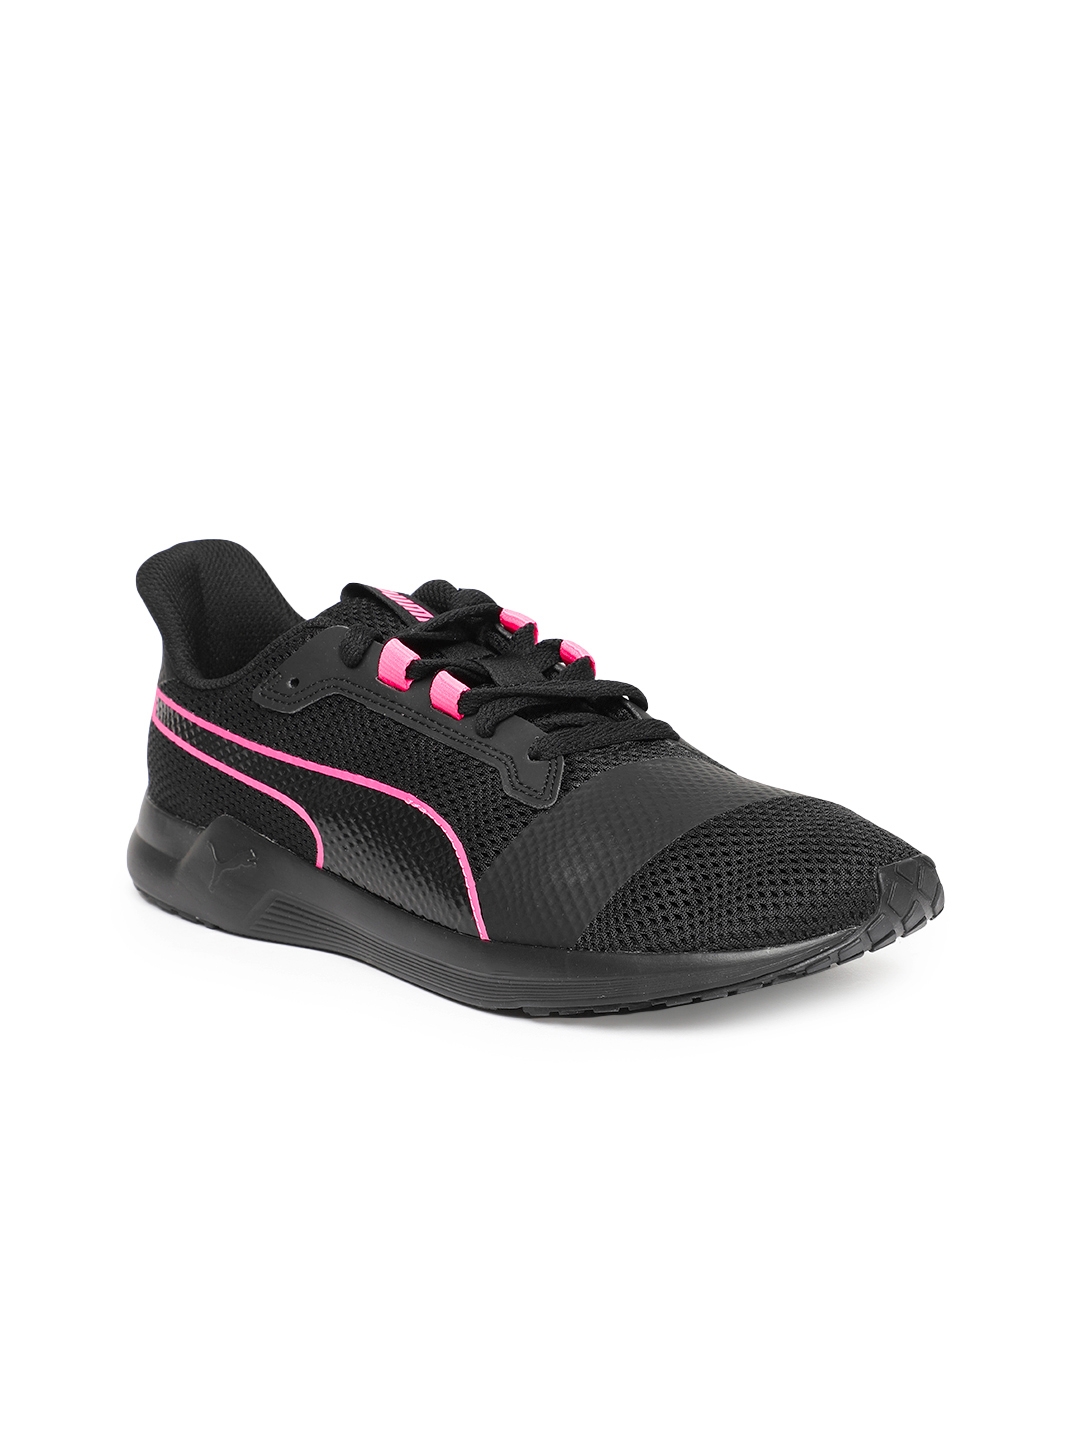 geboorte Vergadering Eik Buy Puma Women Black Training Or Gym Shoes - Sports Shoes for Women 8088019  | Myntra